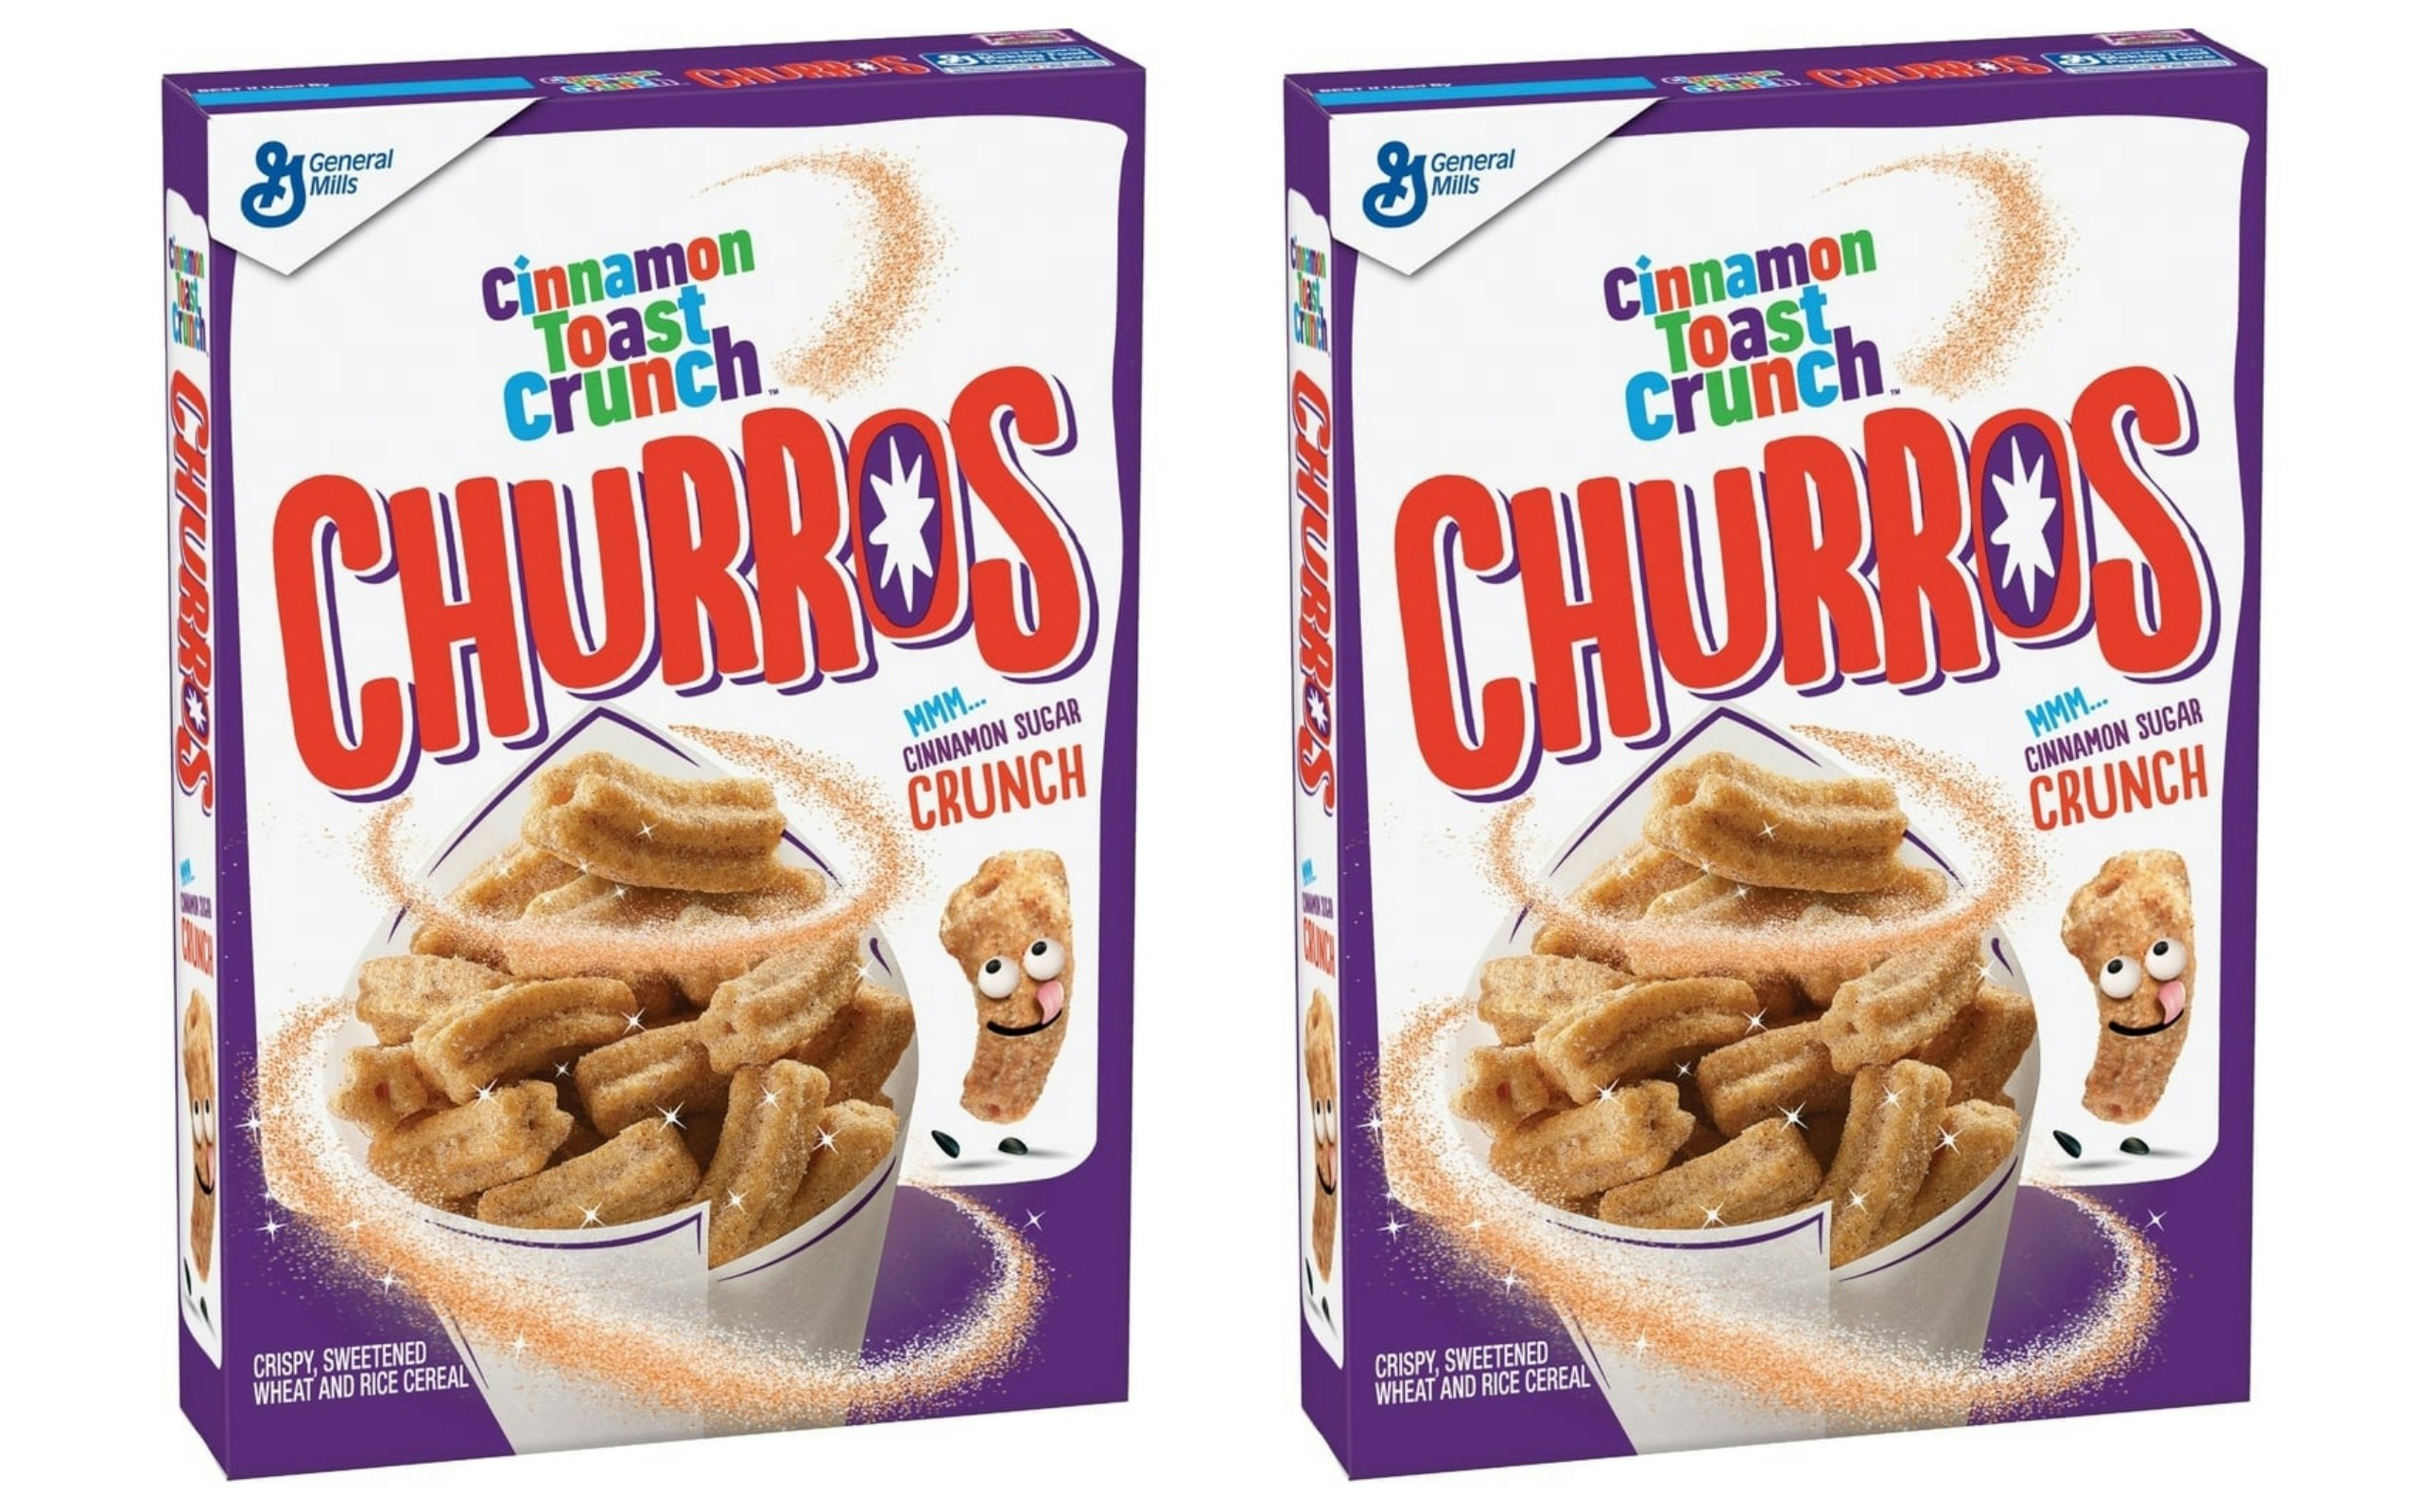 cinnamon crunch churros